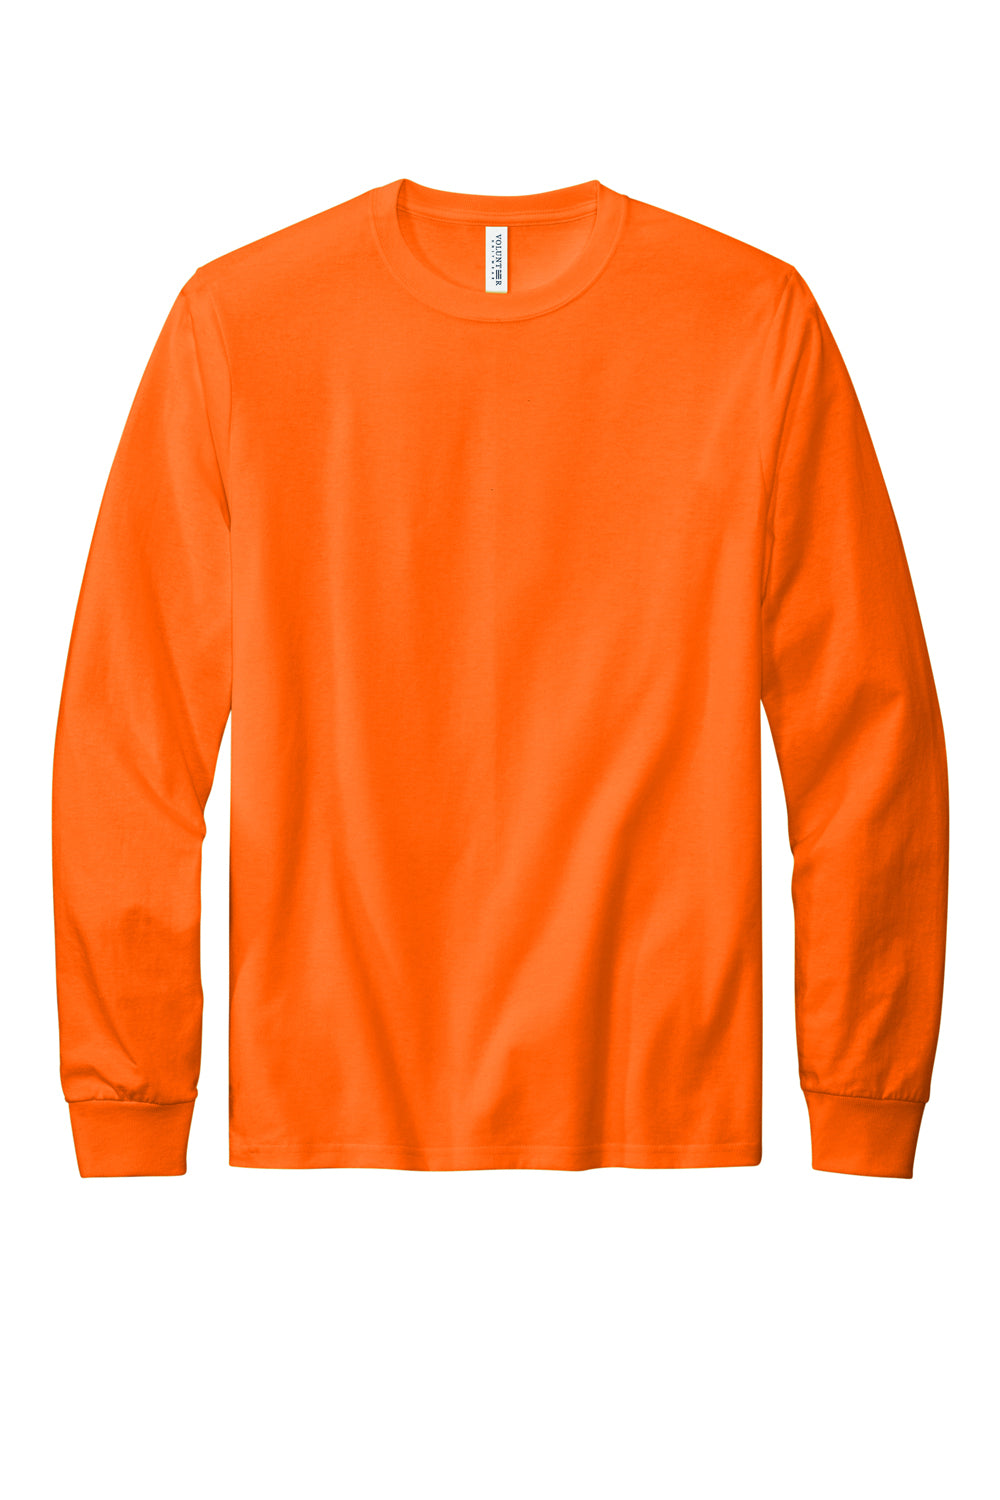 Volunteer Knitwear VL100LS USA Made All American Long Sleeve Crewneck T-Shirts Safety Orange Flat Front